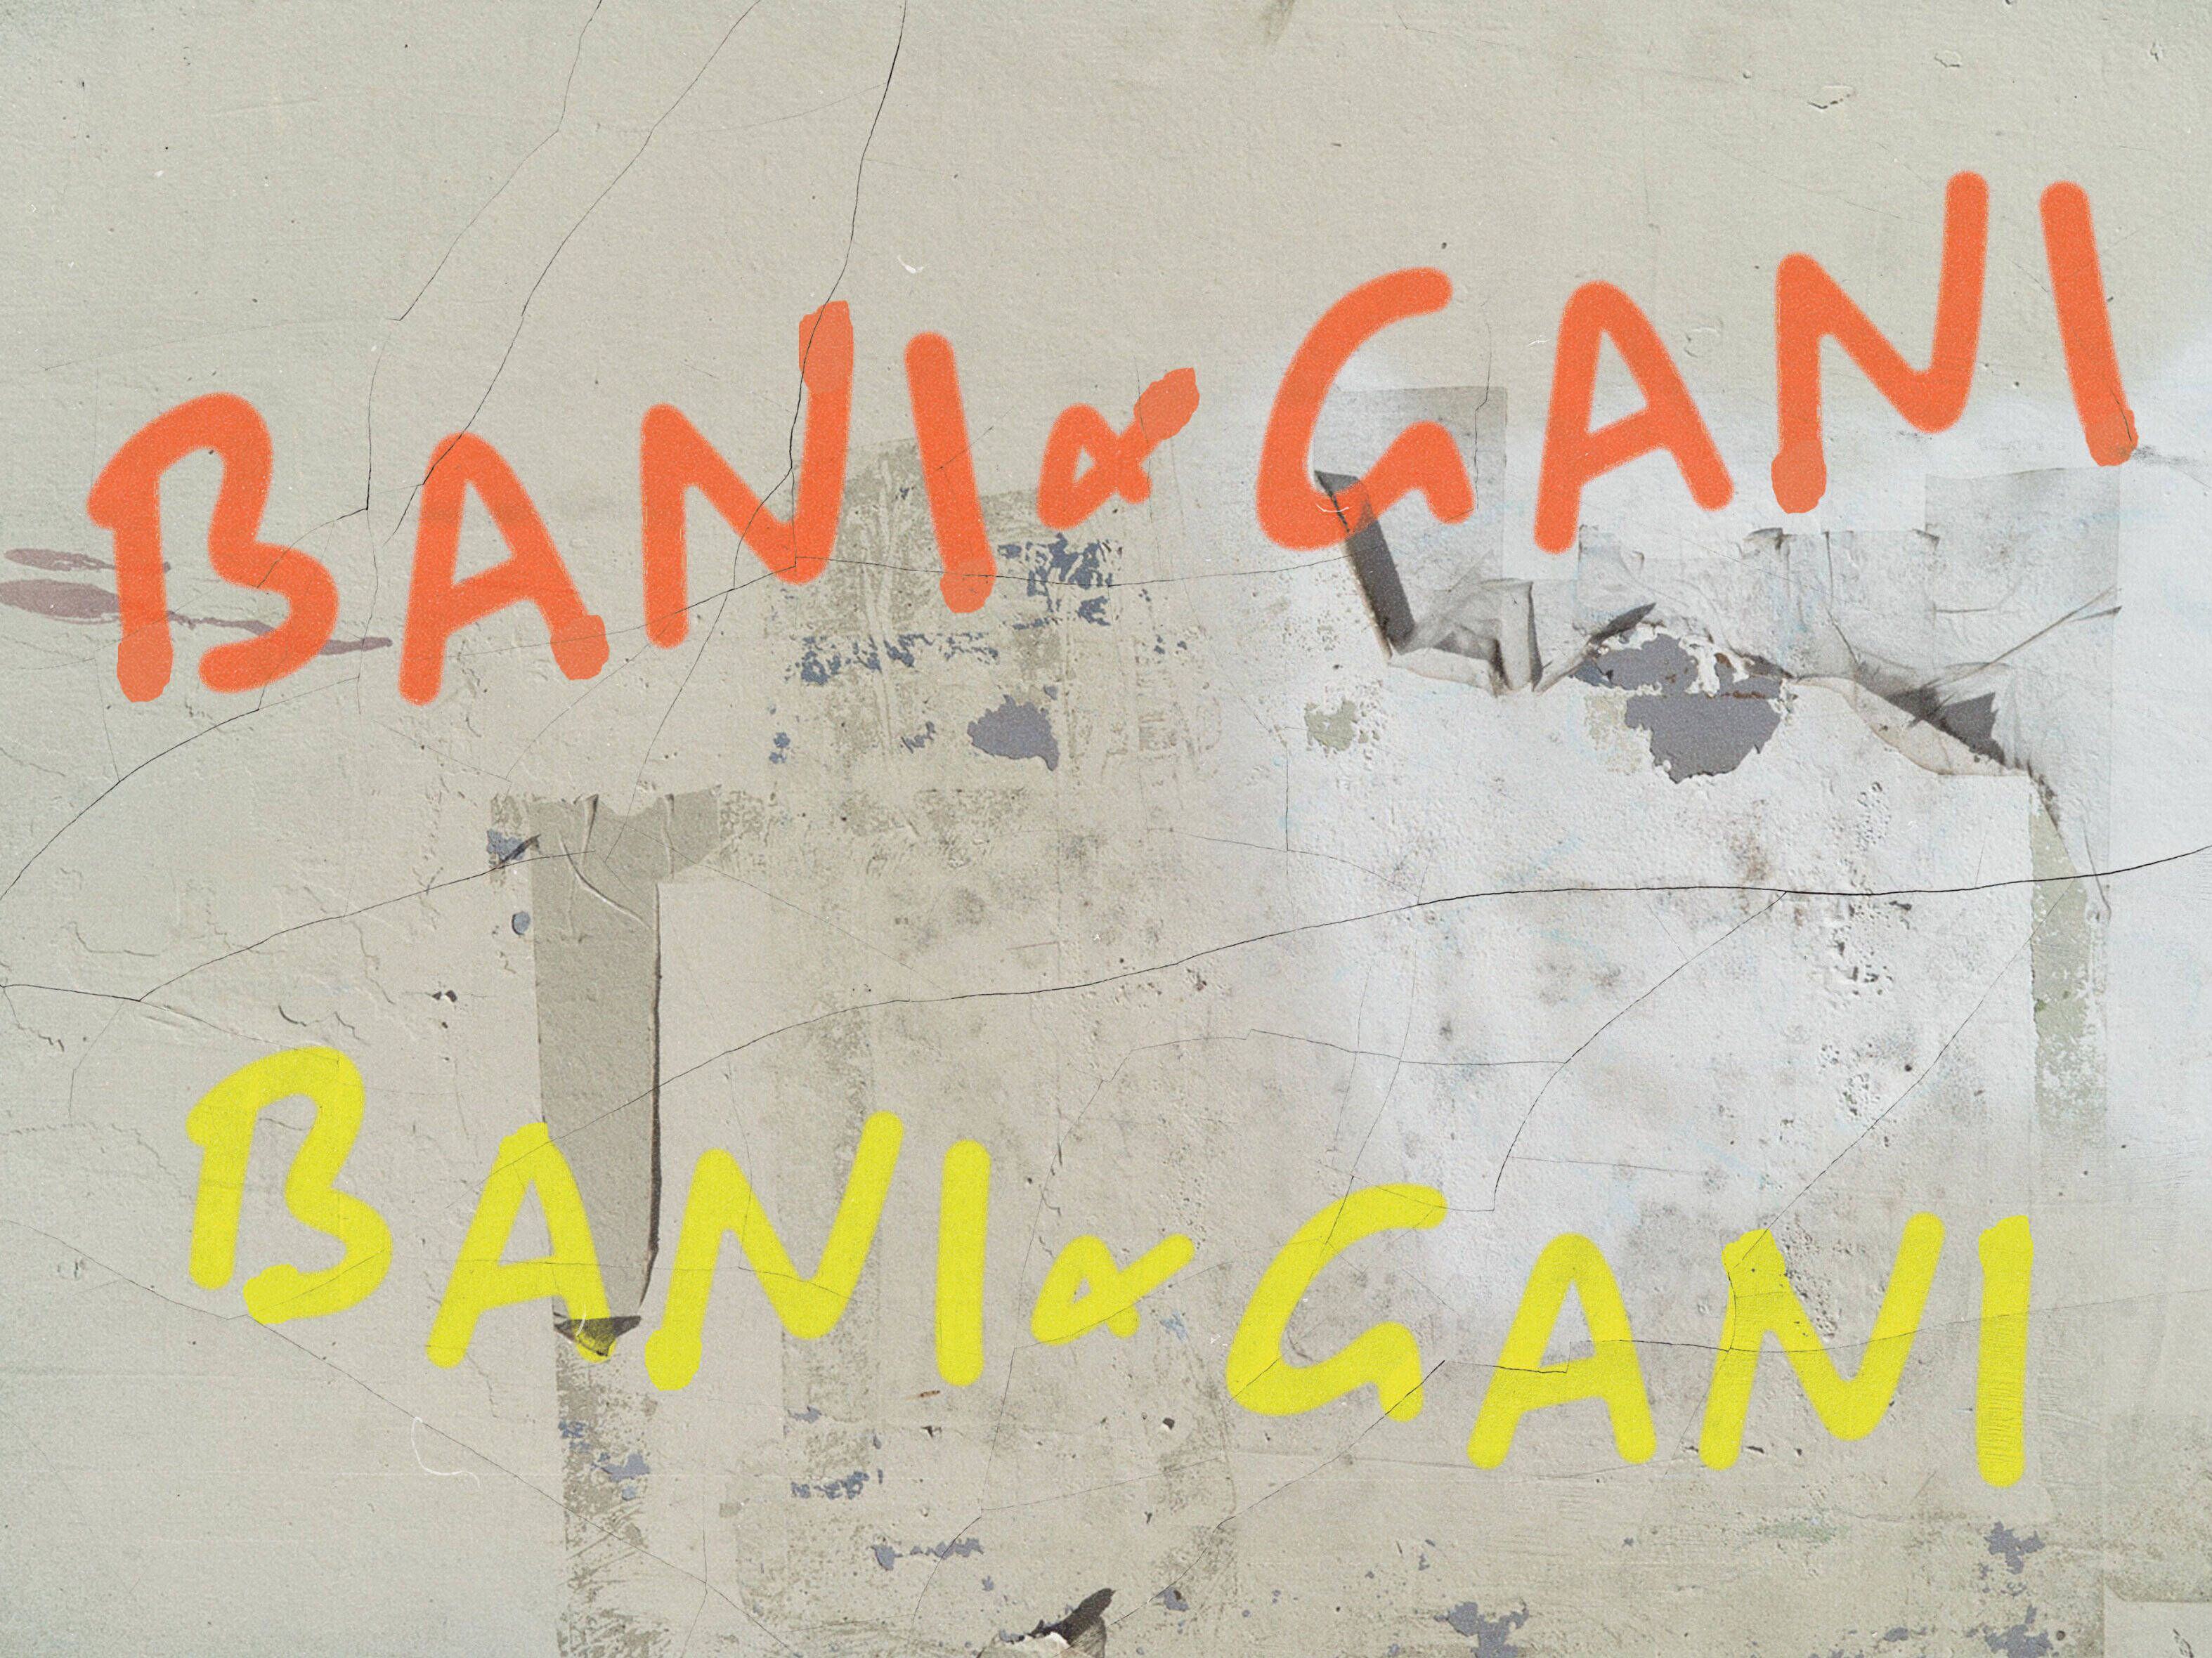 Bani-Gani graffiti